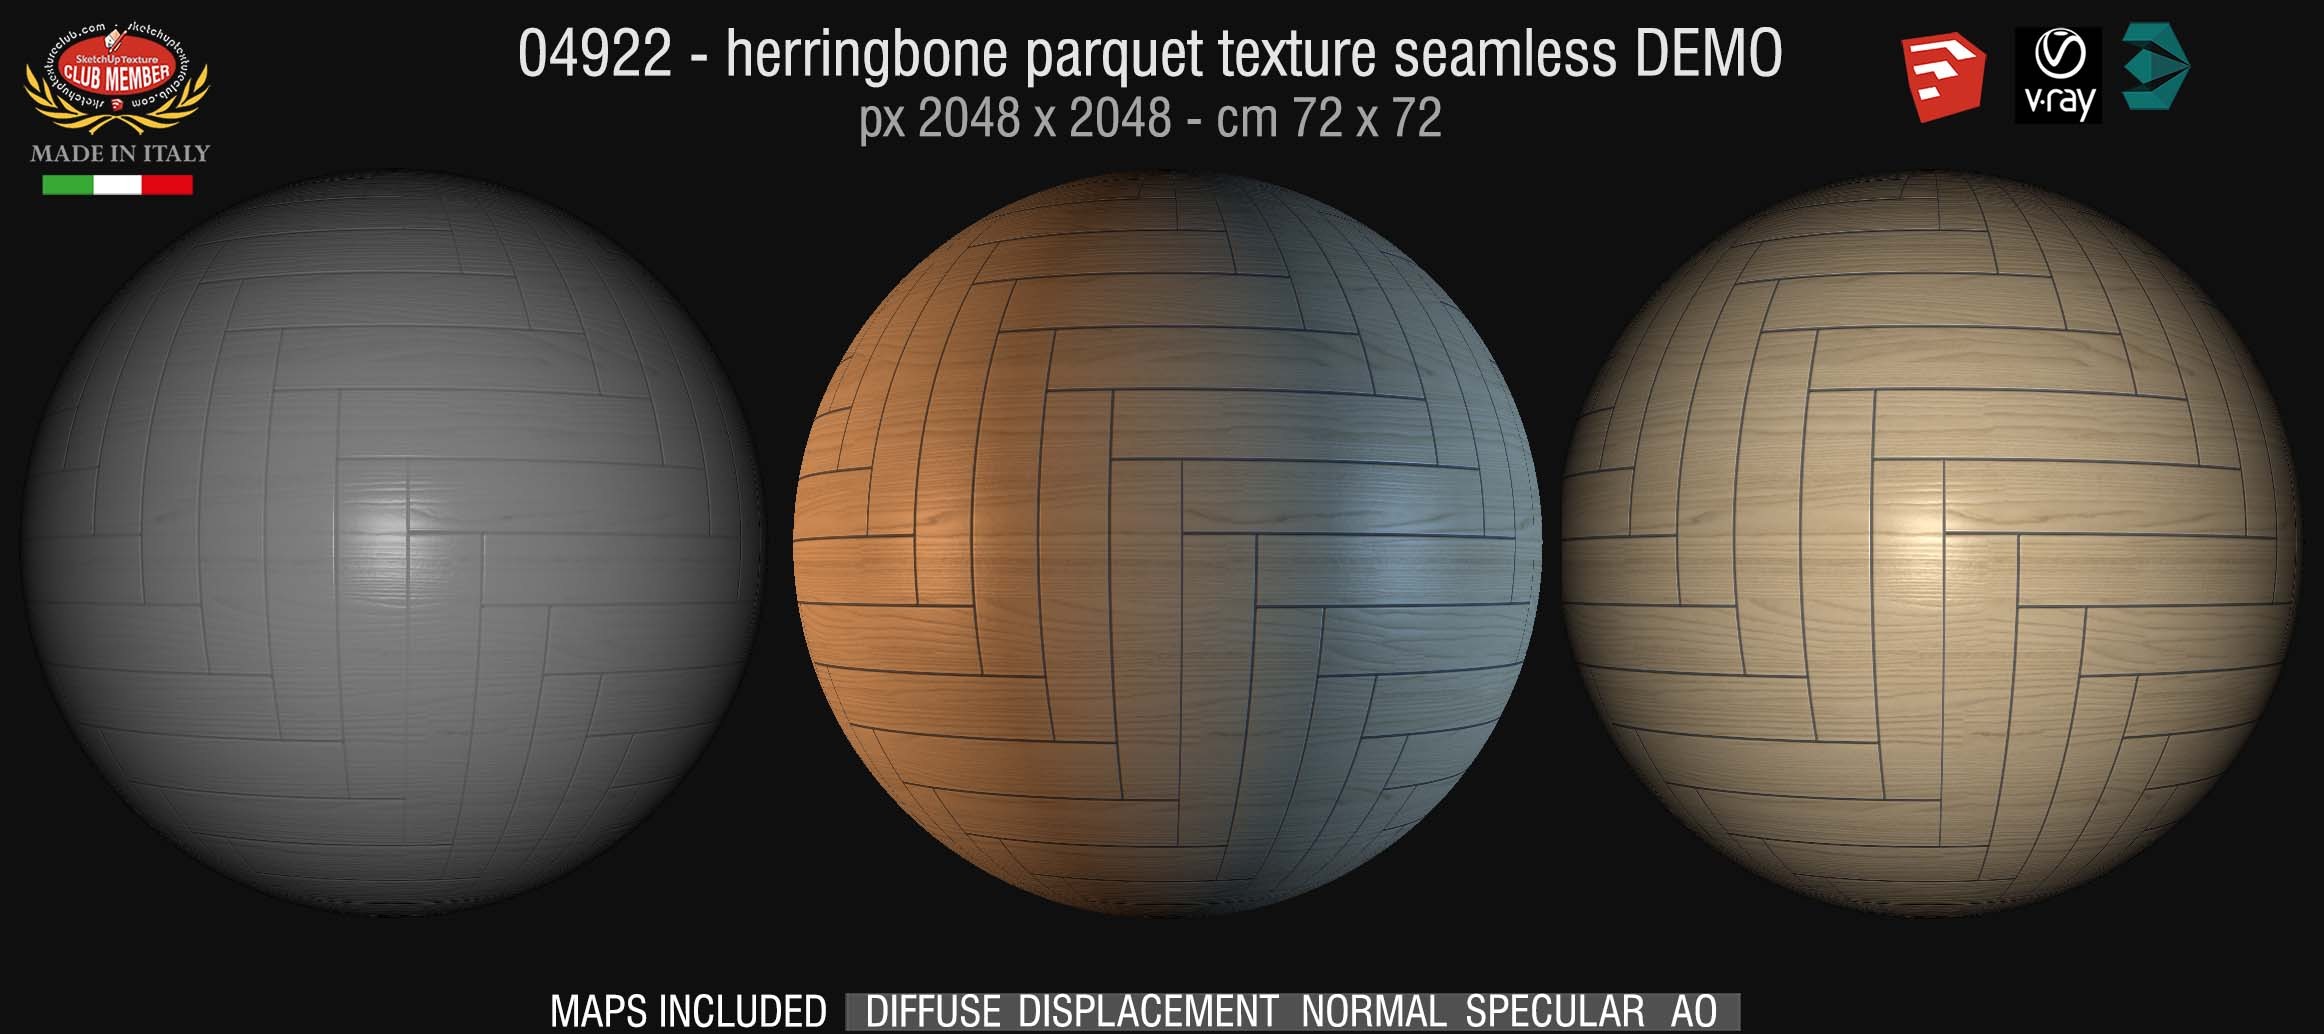 04922 HR Herringbone parquet texture seamless + maps DEMO